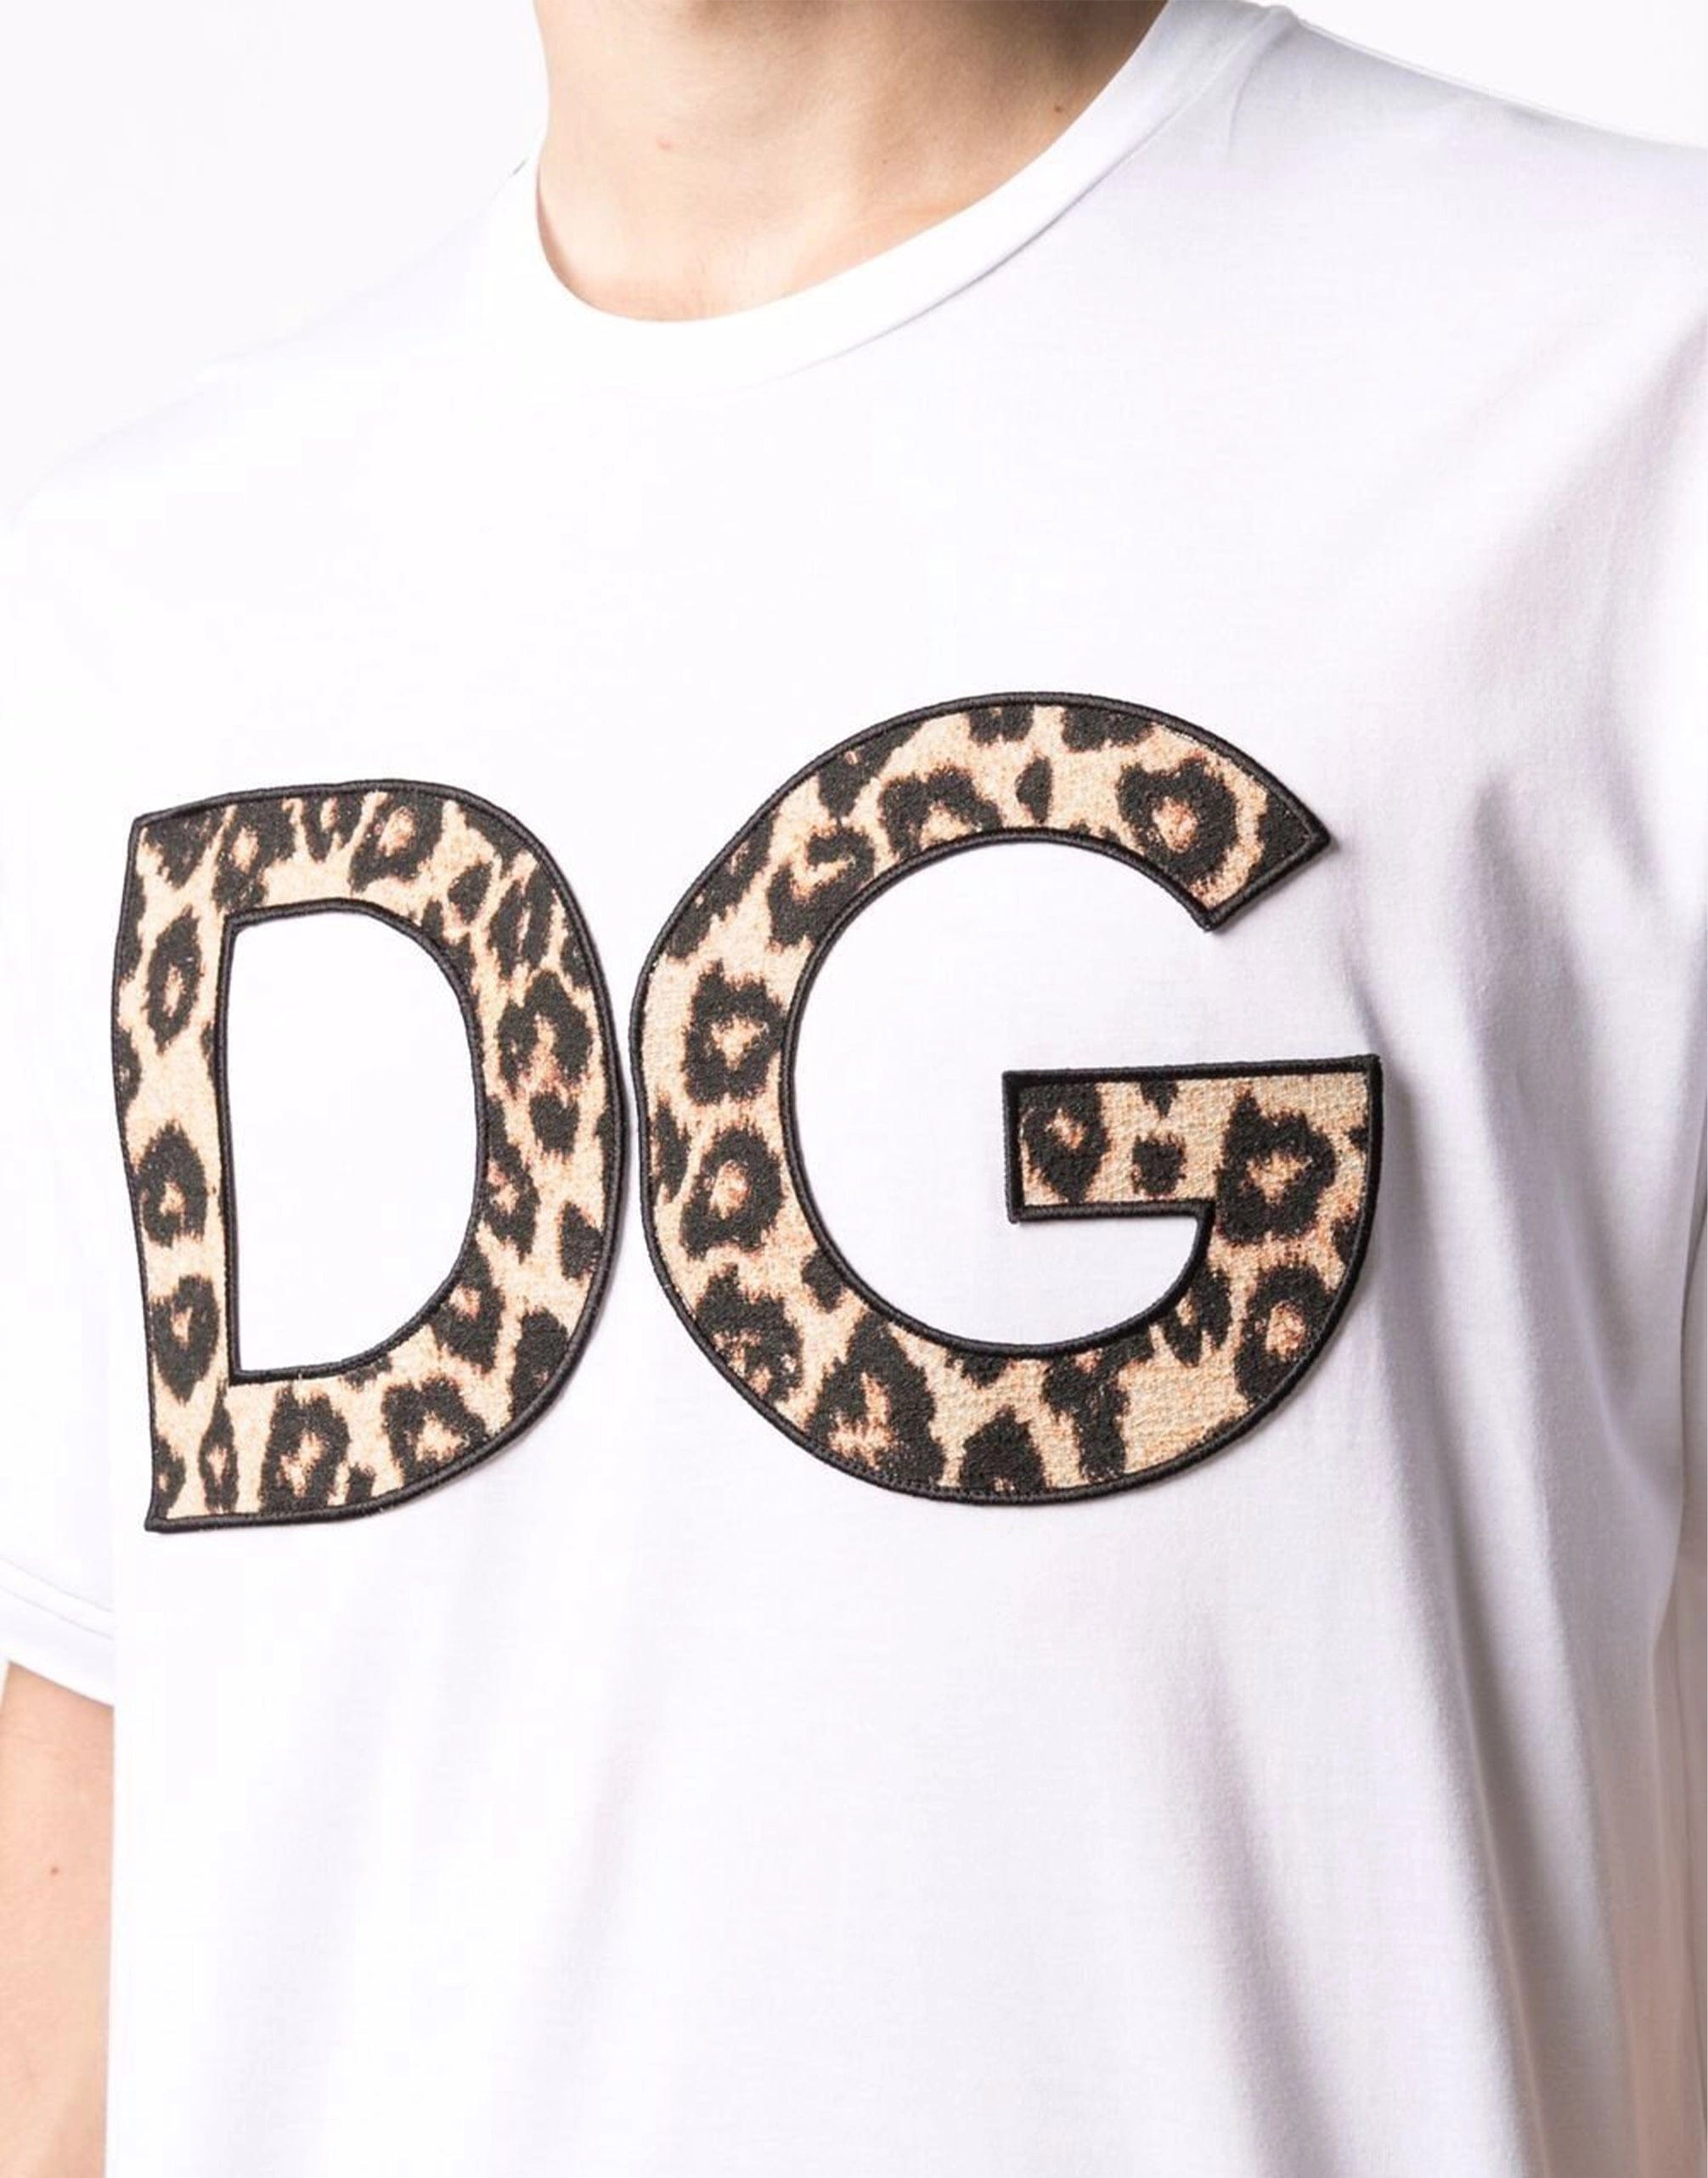 Dolce & Gabbana DG Leopard-Print Patch T-Shirt